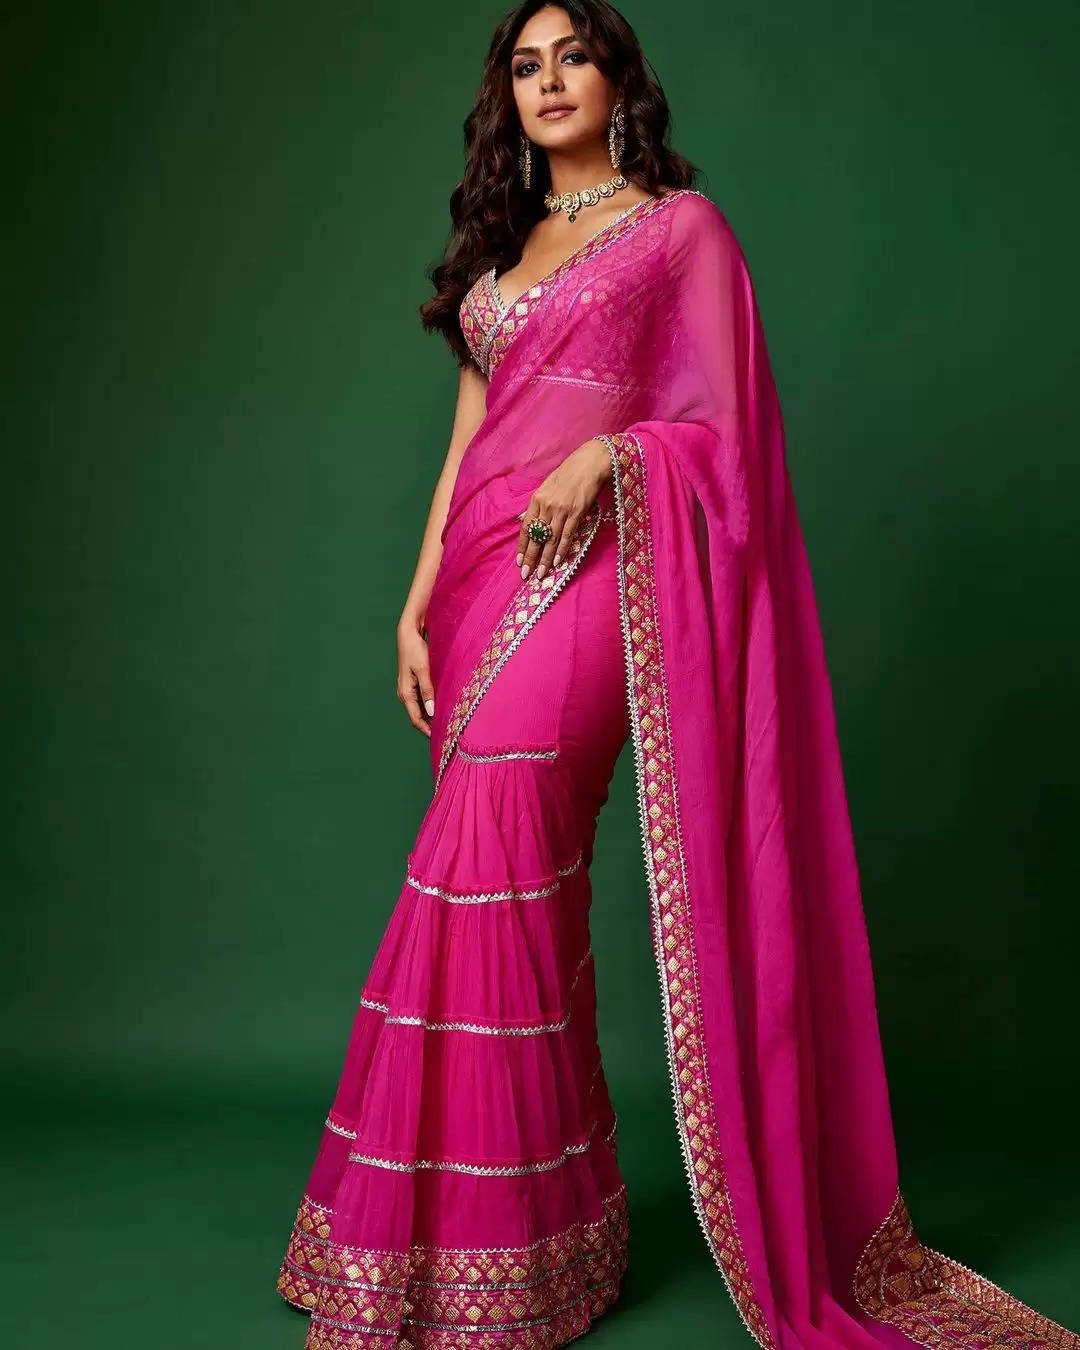 Photos: Mrunal Thakur Ups Glamour Quotient In Vibrant Pink Saree, See Diva's Gorgeous Saree Looks